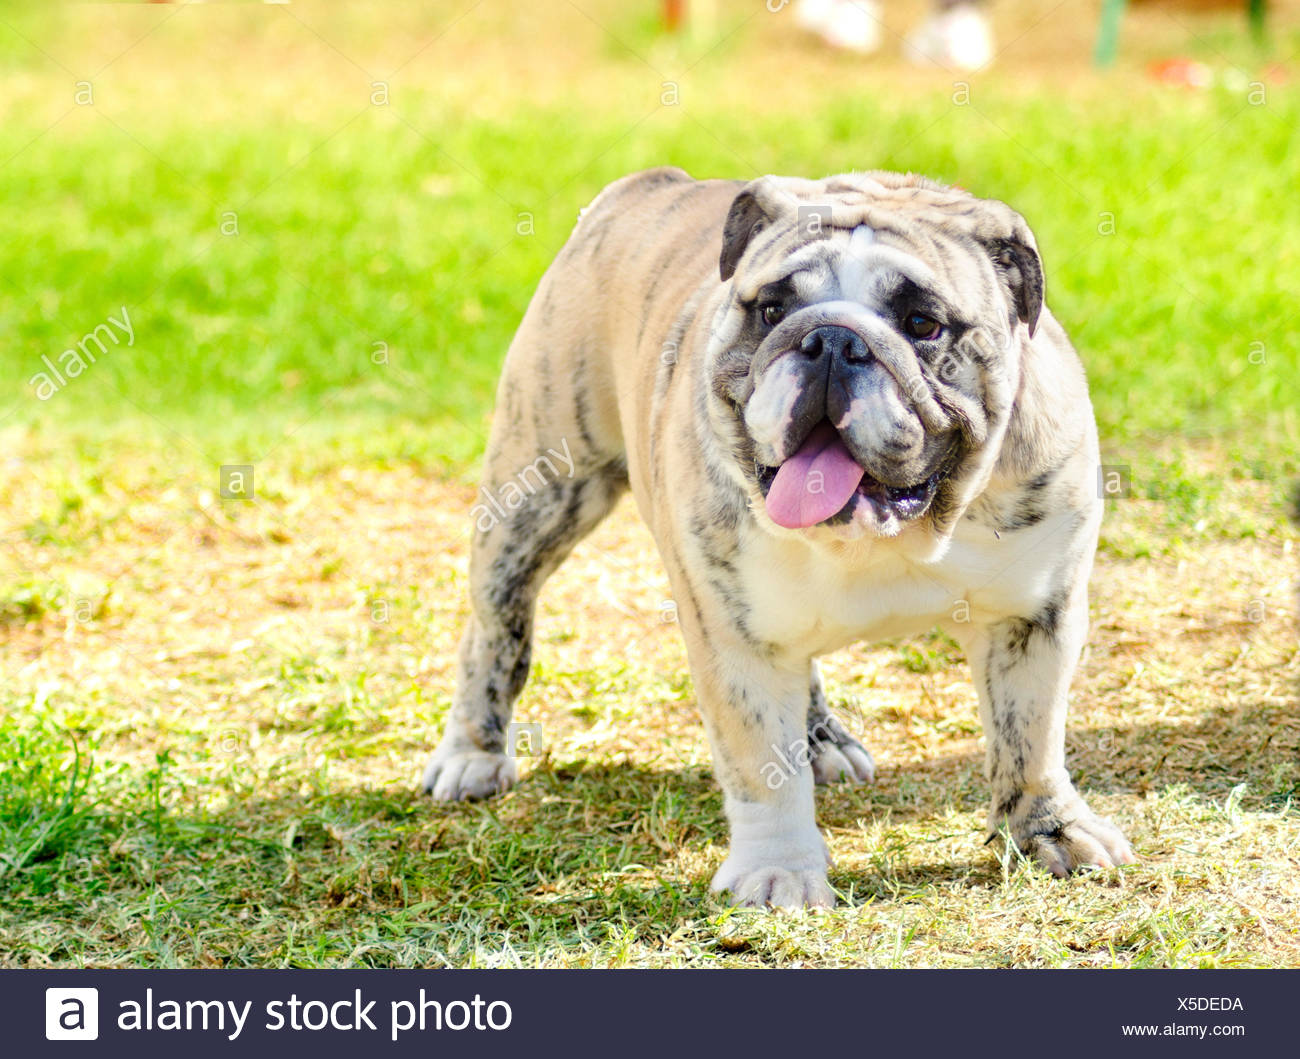 fawn brindle and white english bulldog